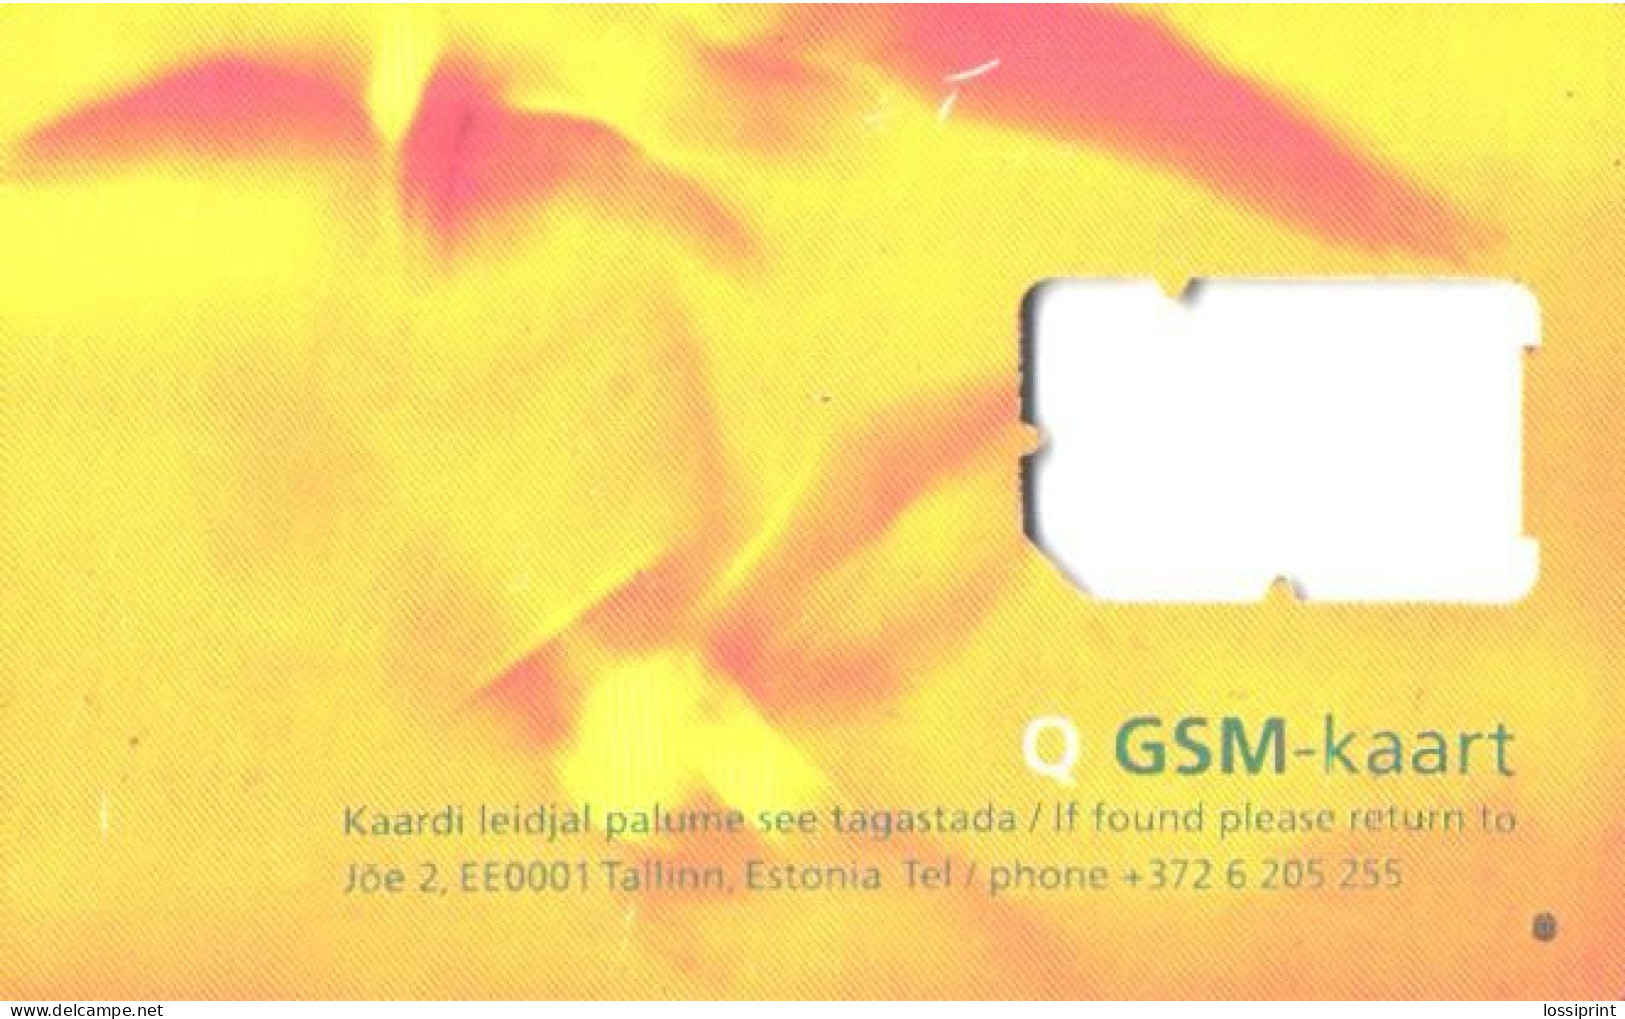 Estonia:Mobile Phone SIM Card Without Chip, Q GSM-card - Estonia